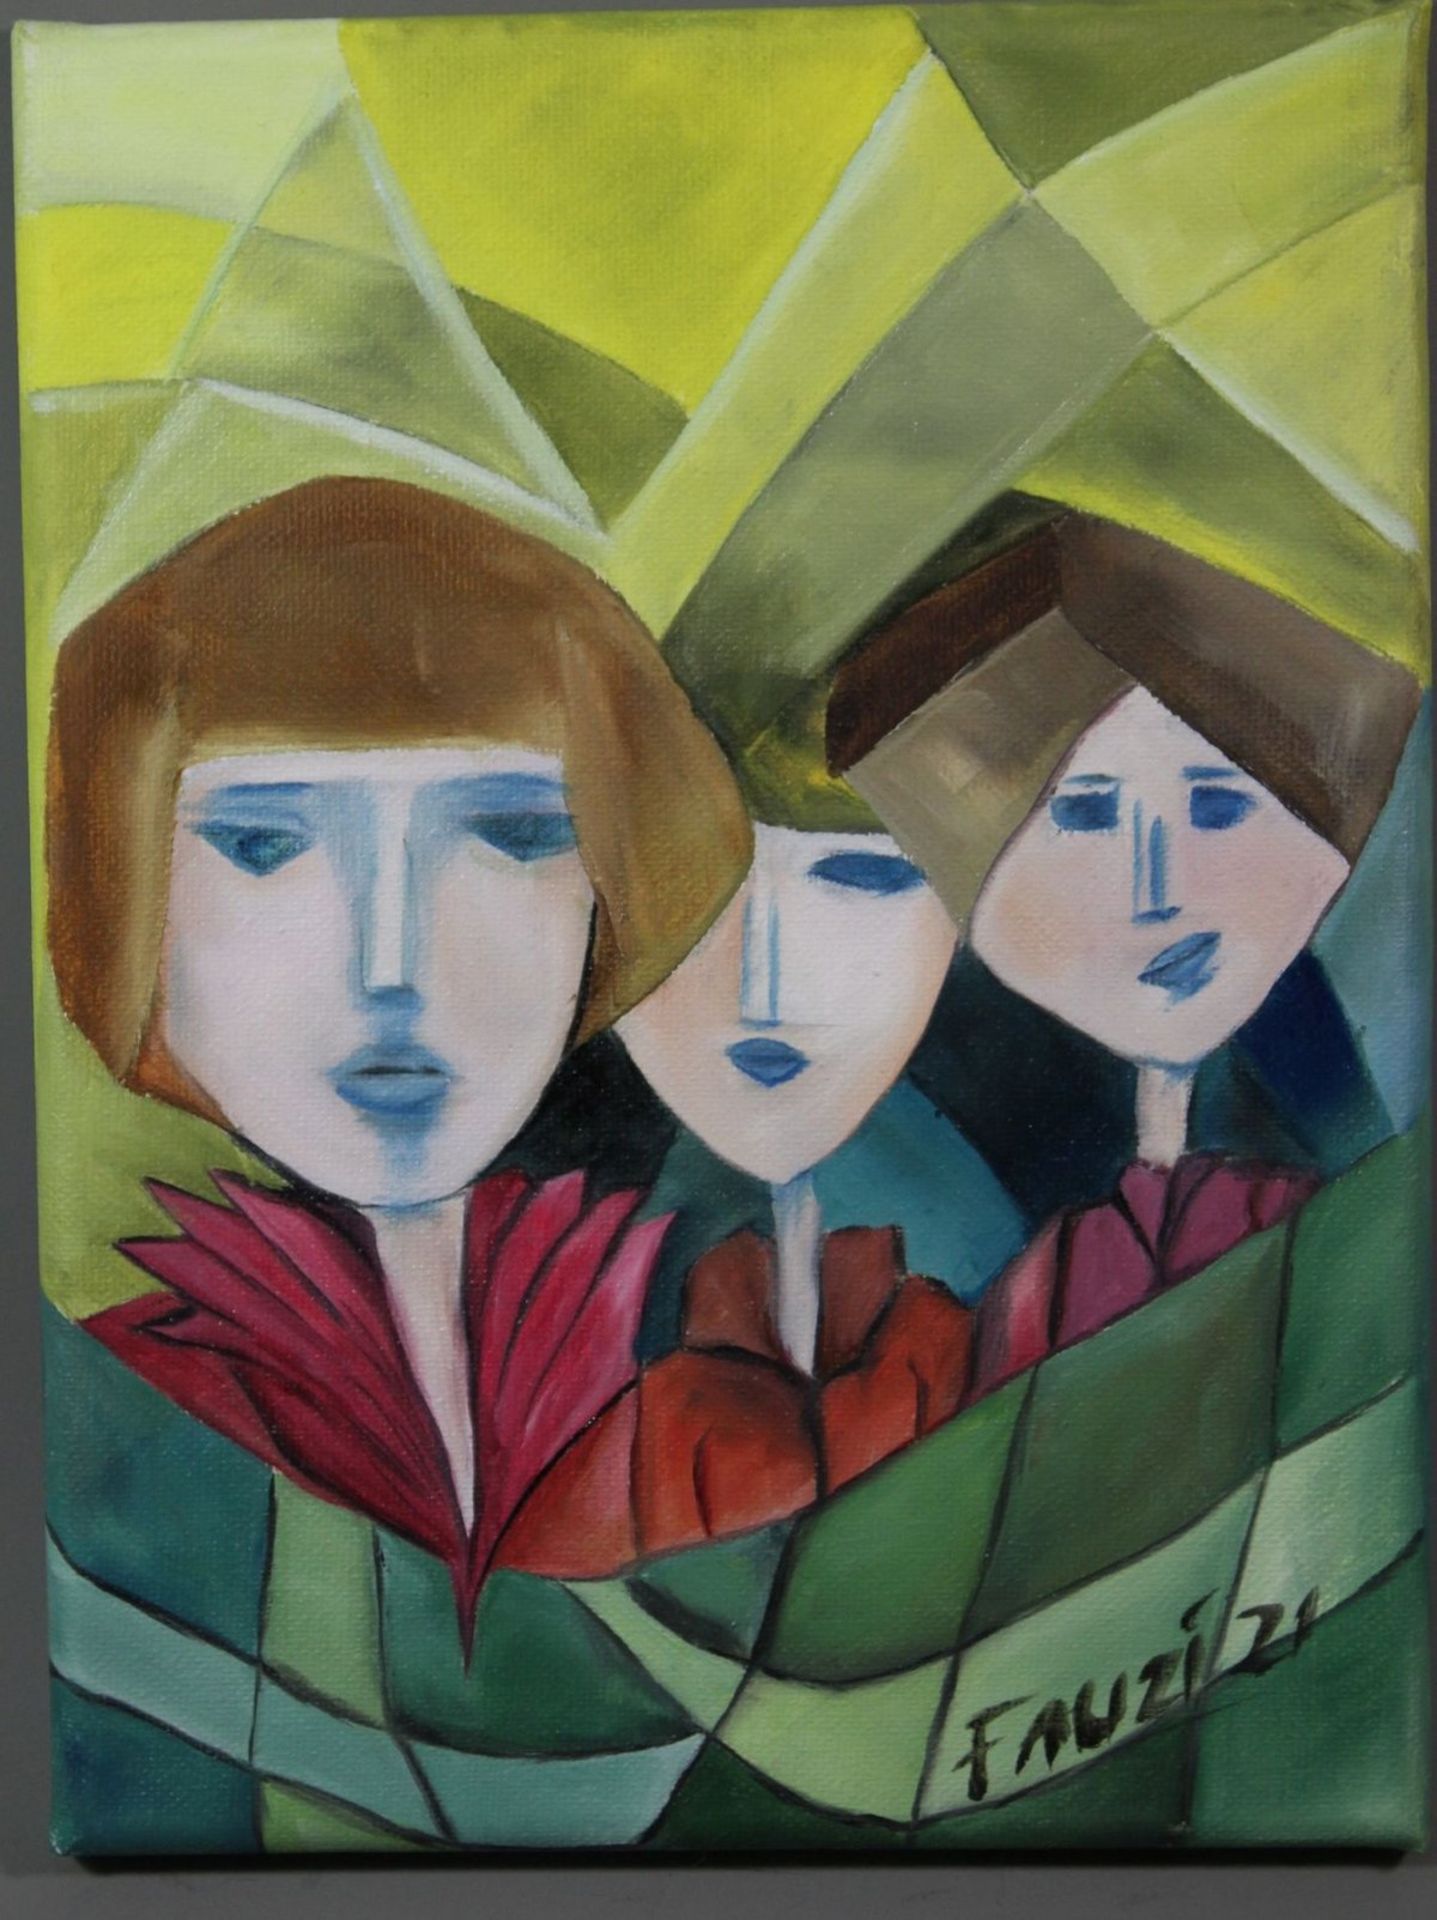 Fauzi, Künstler des 20./21. Jhd., 3 Frauen, Öl/Leinwand, ungerahmt, 24 x 18cm.